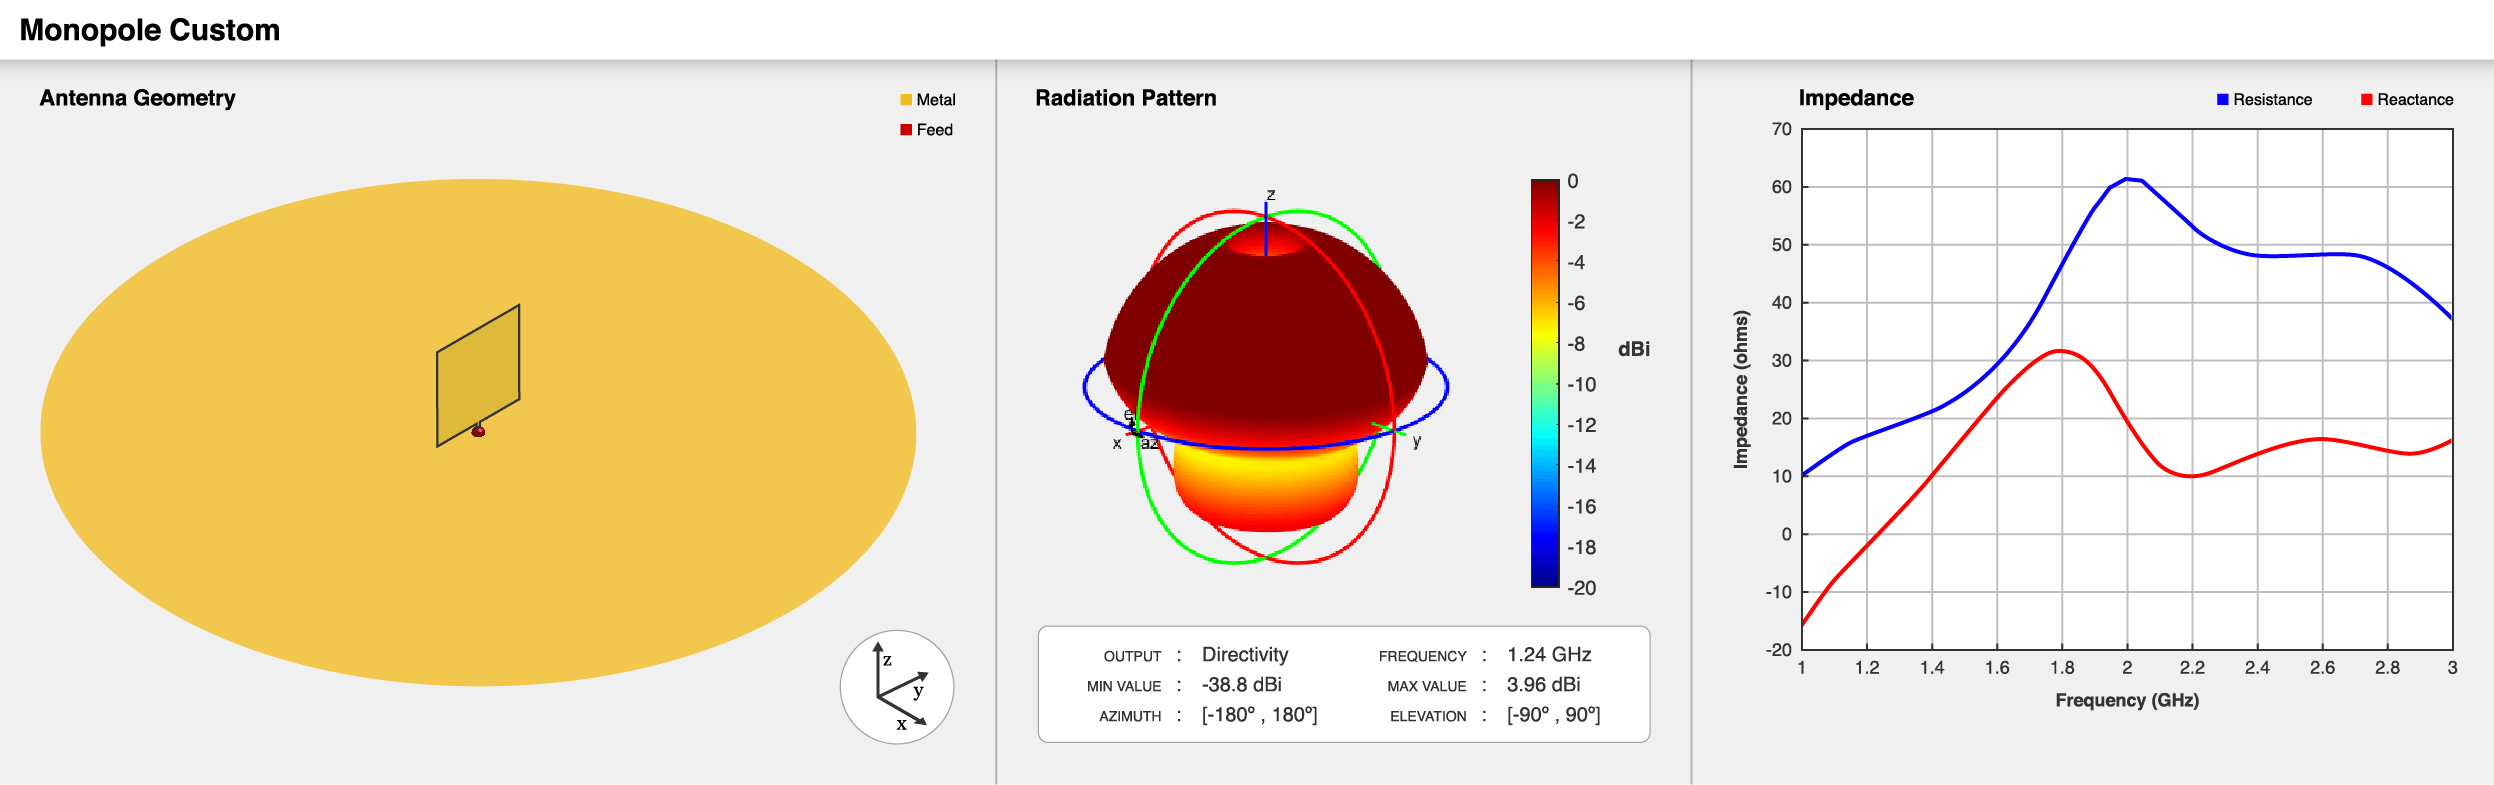 Custom monopole antenna geometry, default radiation pattern, and impedance plot.